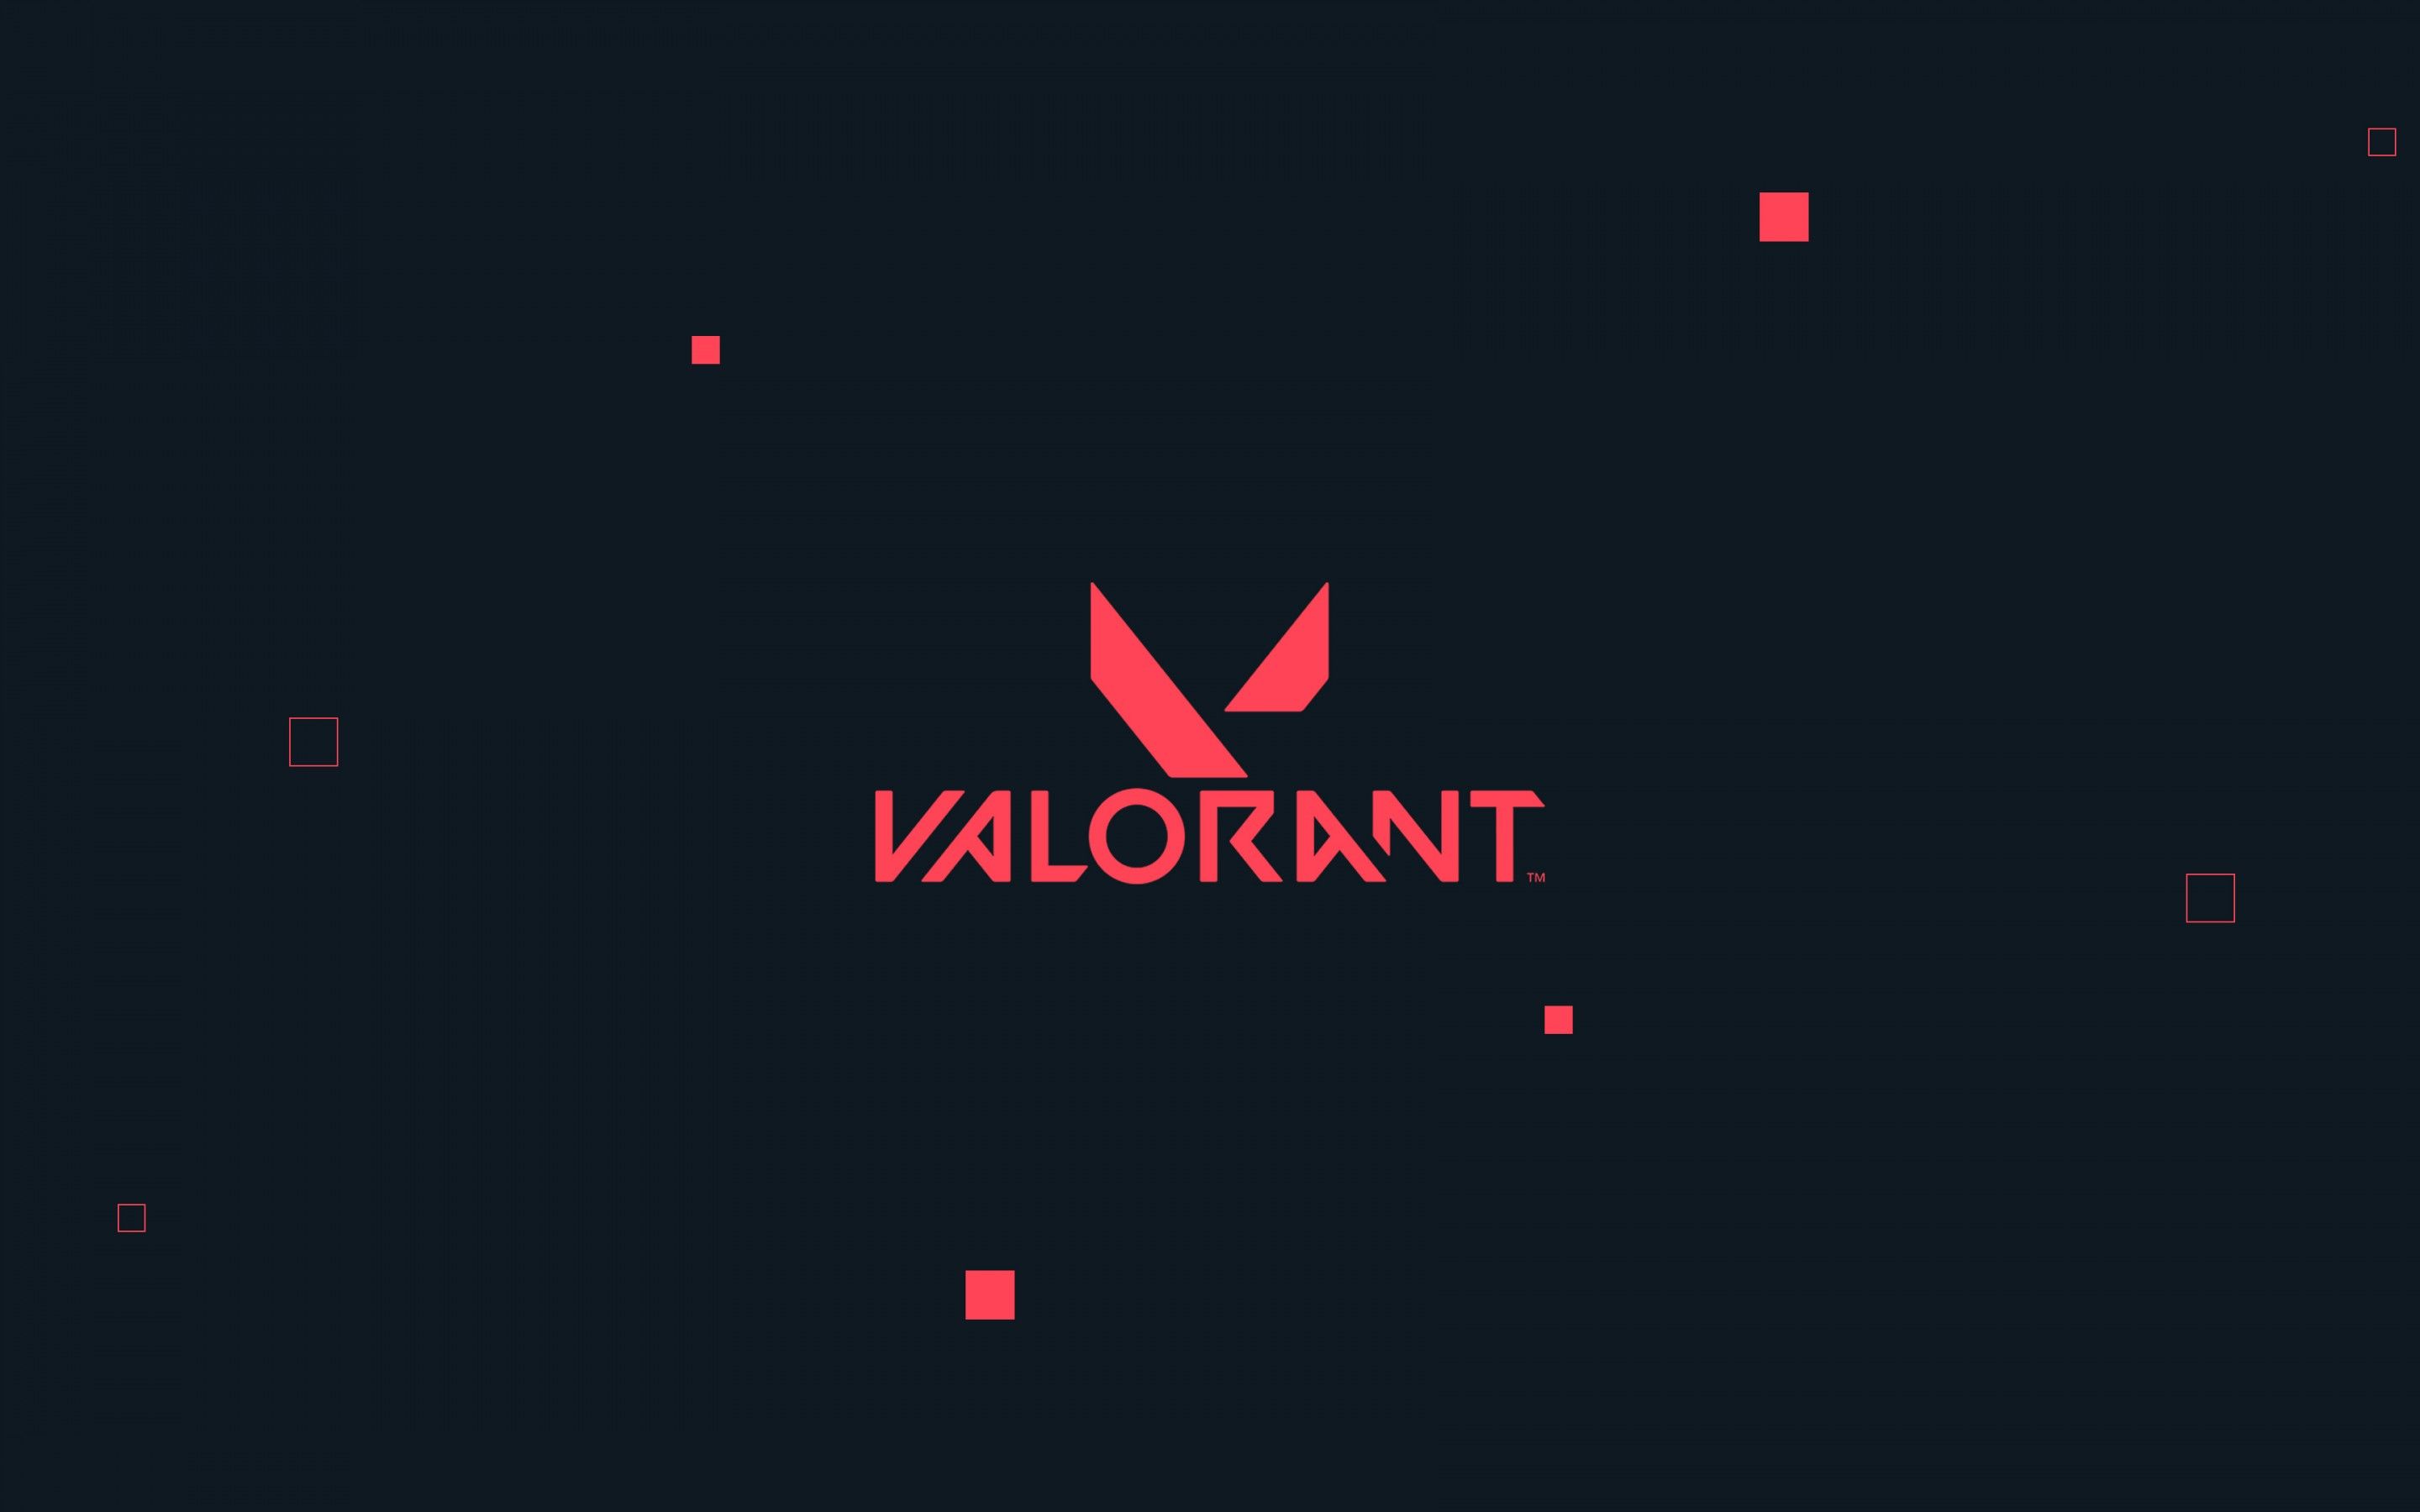 Valorant 4K Wallpaper, PC Games, 2020 Games, Black Dark